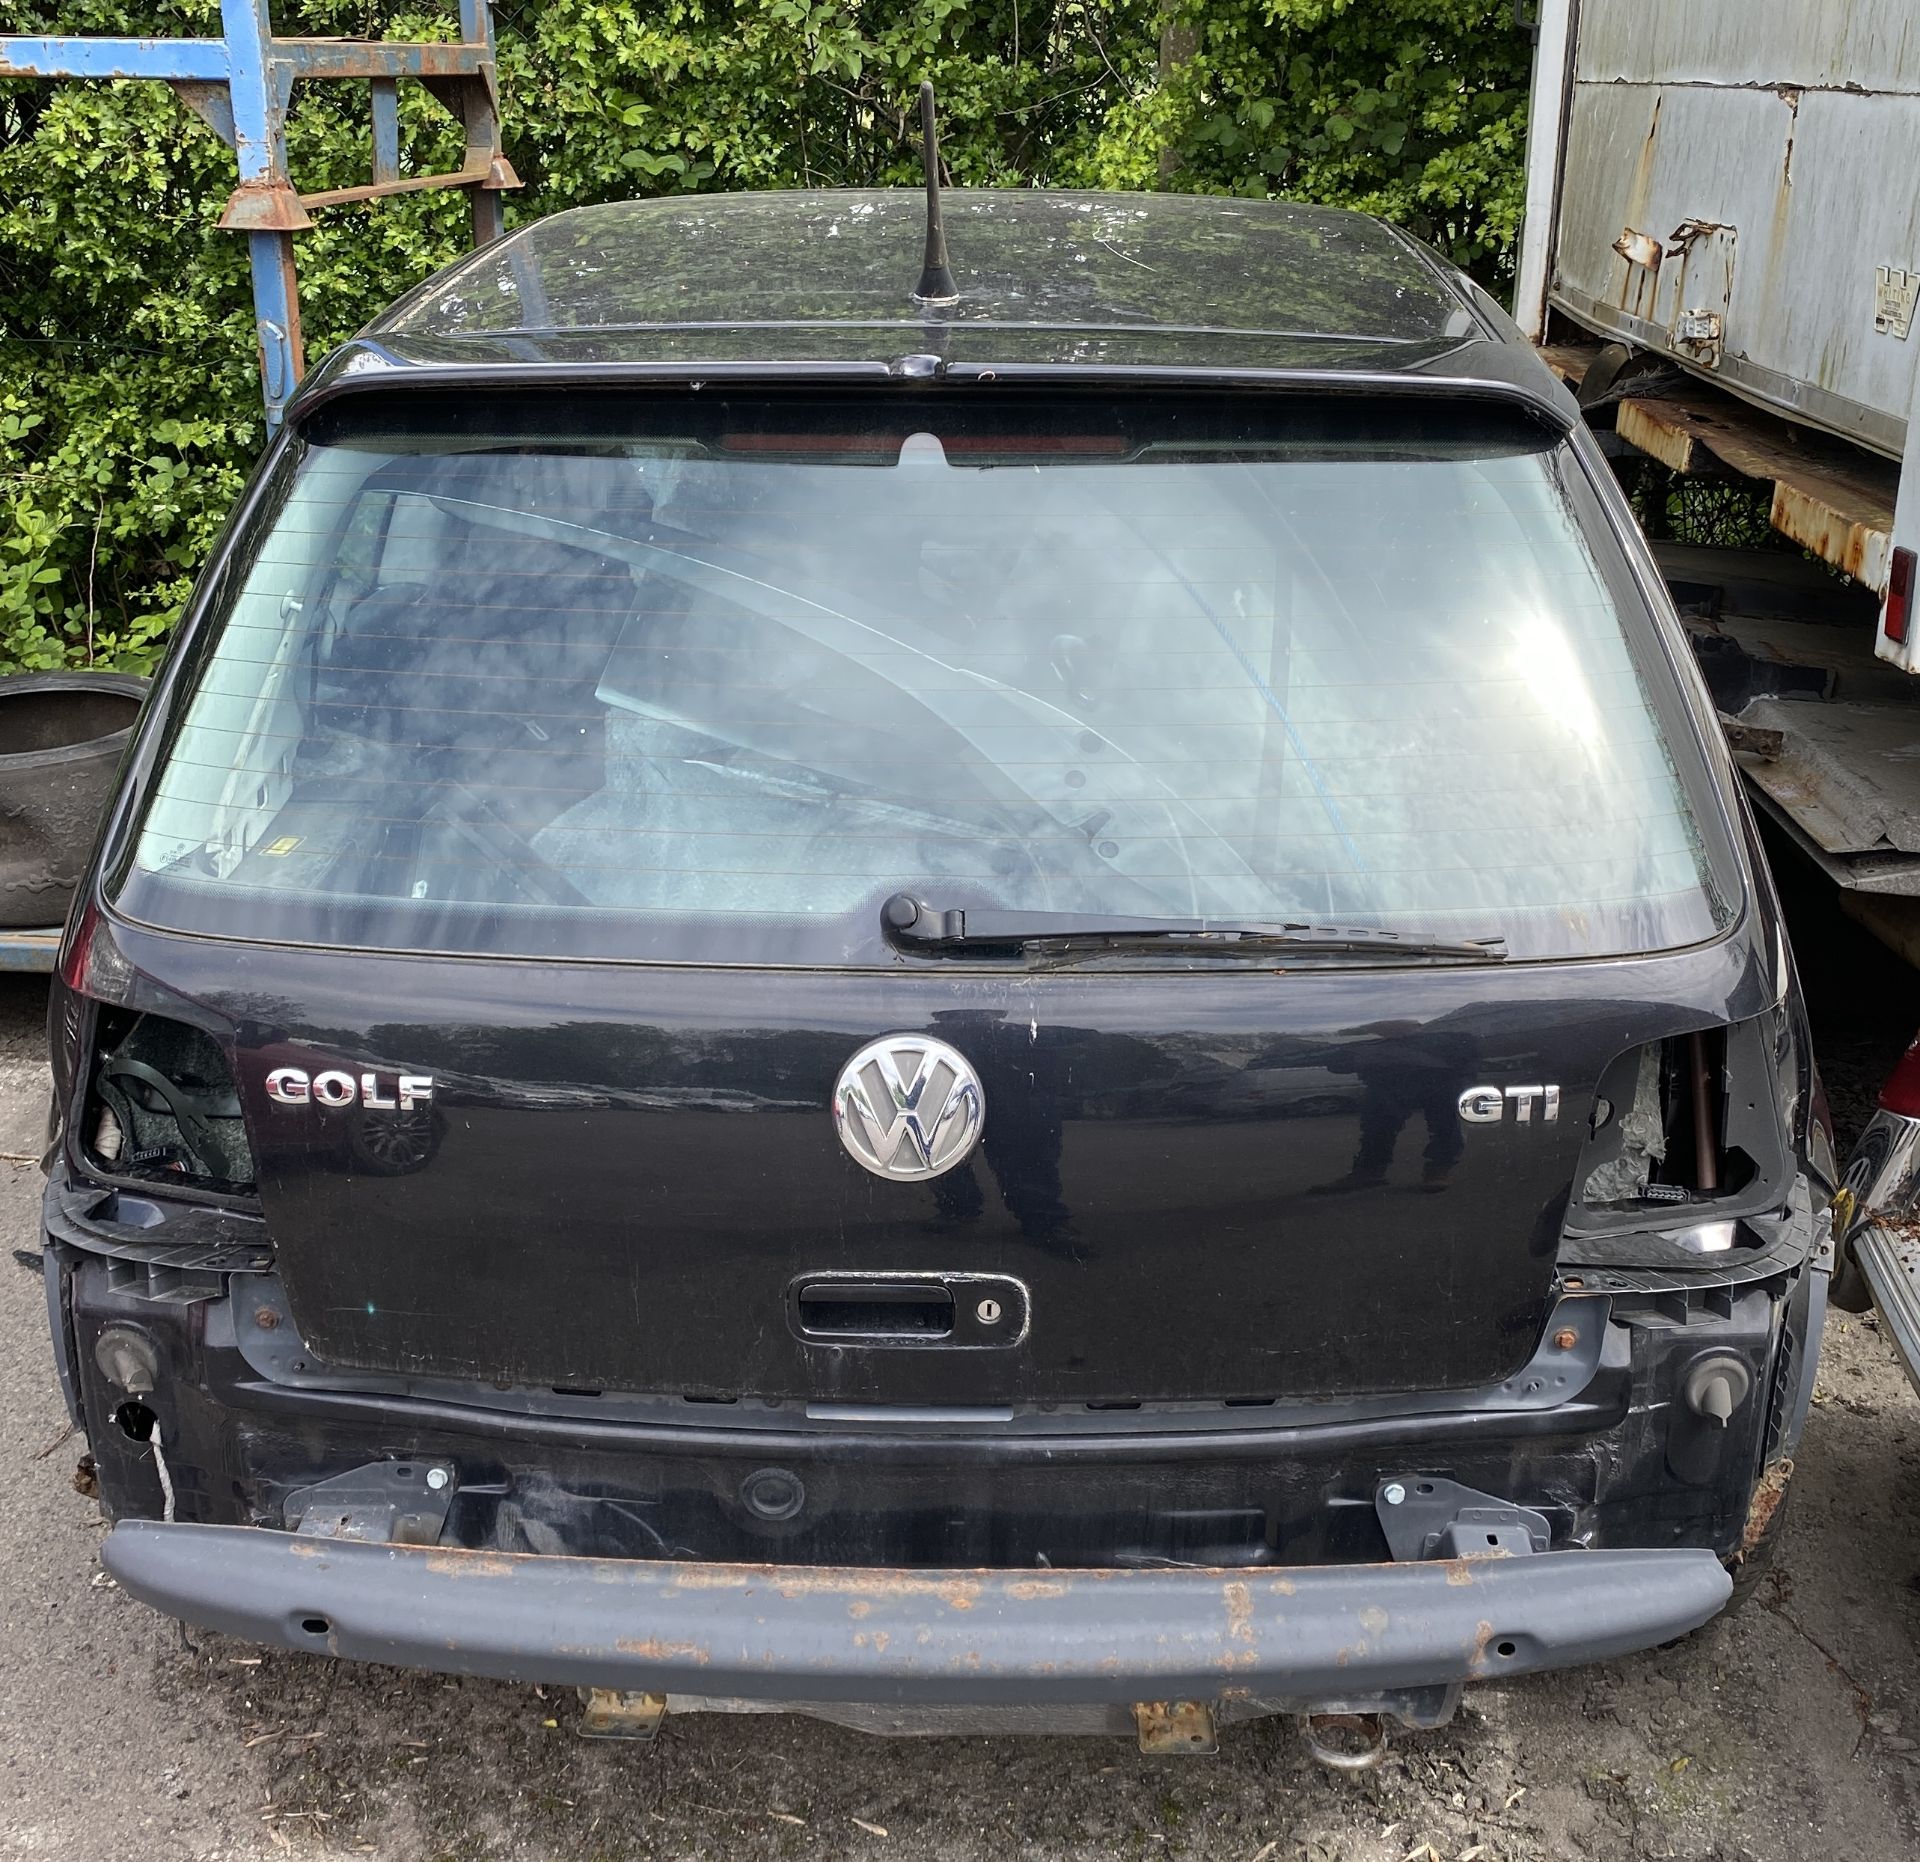 Restoration Vehicle/Spares: Golf MK 4 GTI, black, two door, no registration number, no documents,